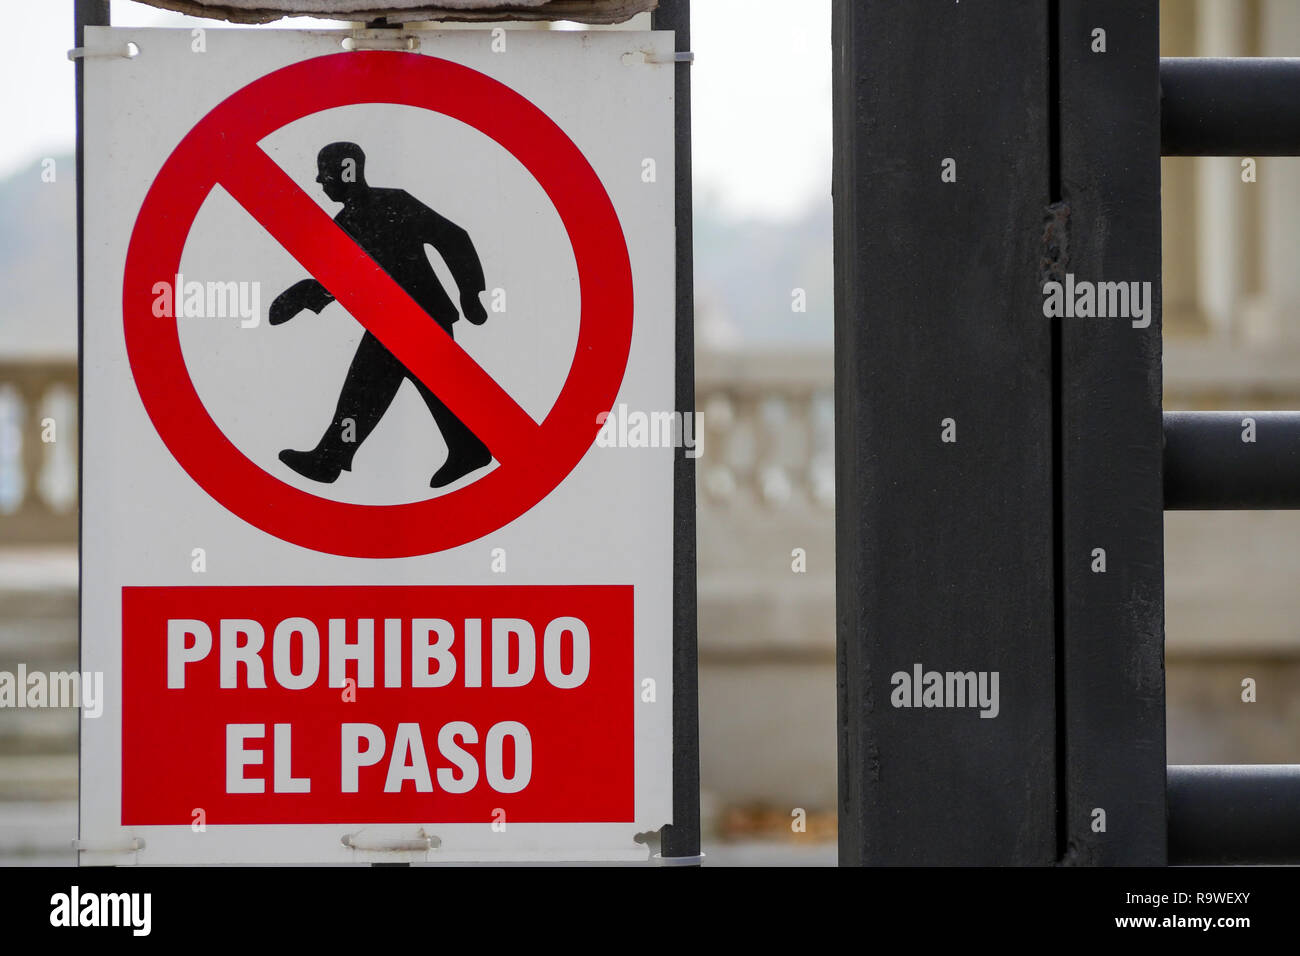 Prohibited passage, Madrid, Spain Stock Photo